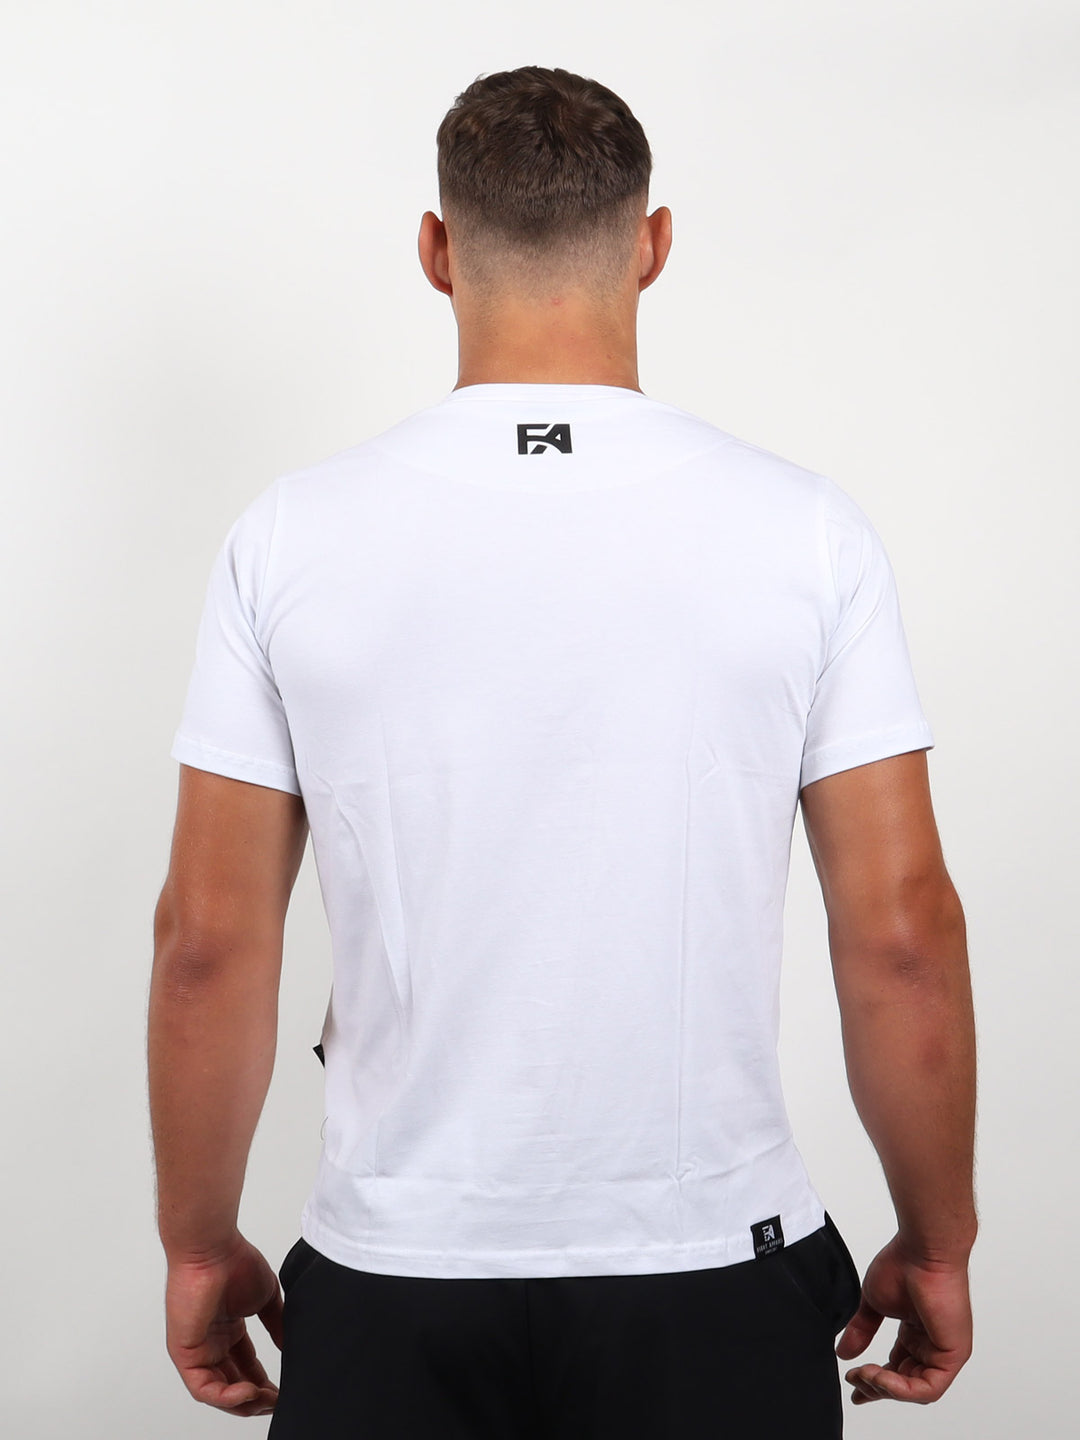 FA - Swiss Edition - Wilhelm Tell - V3.0 Shirt - White